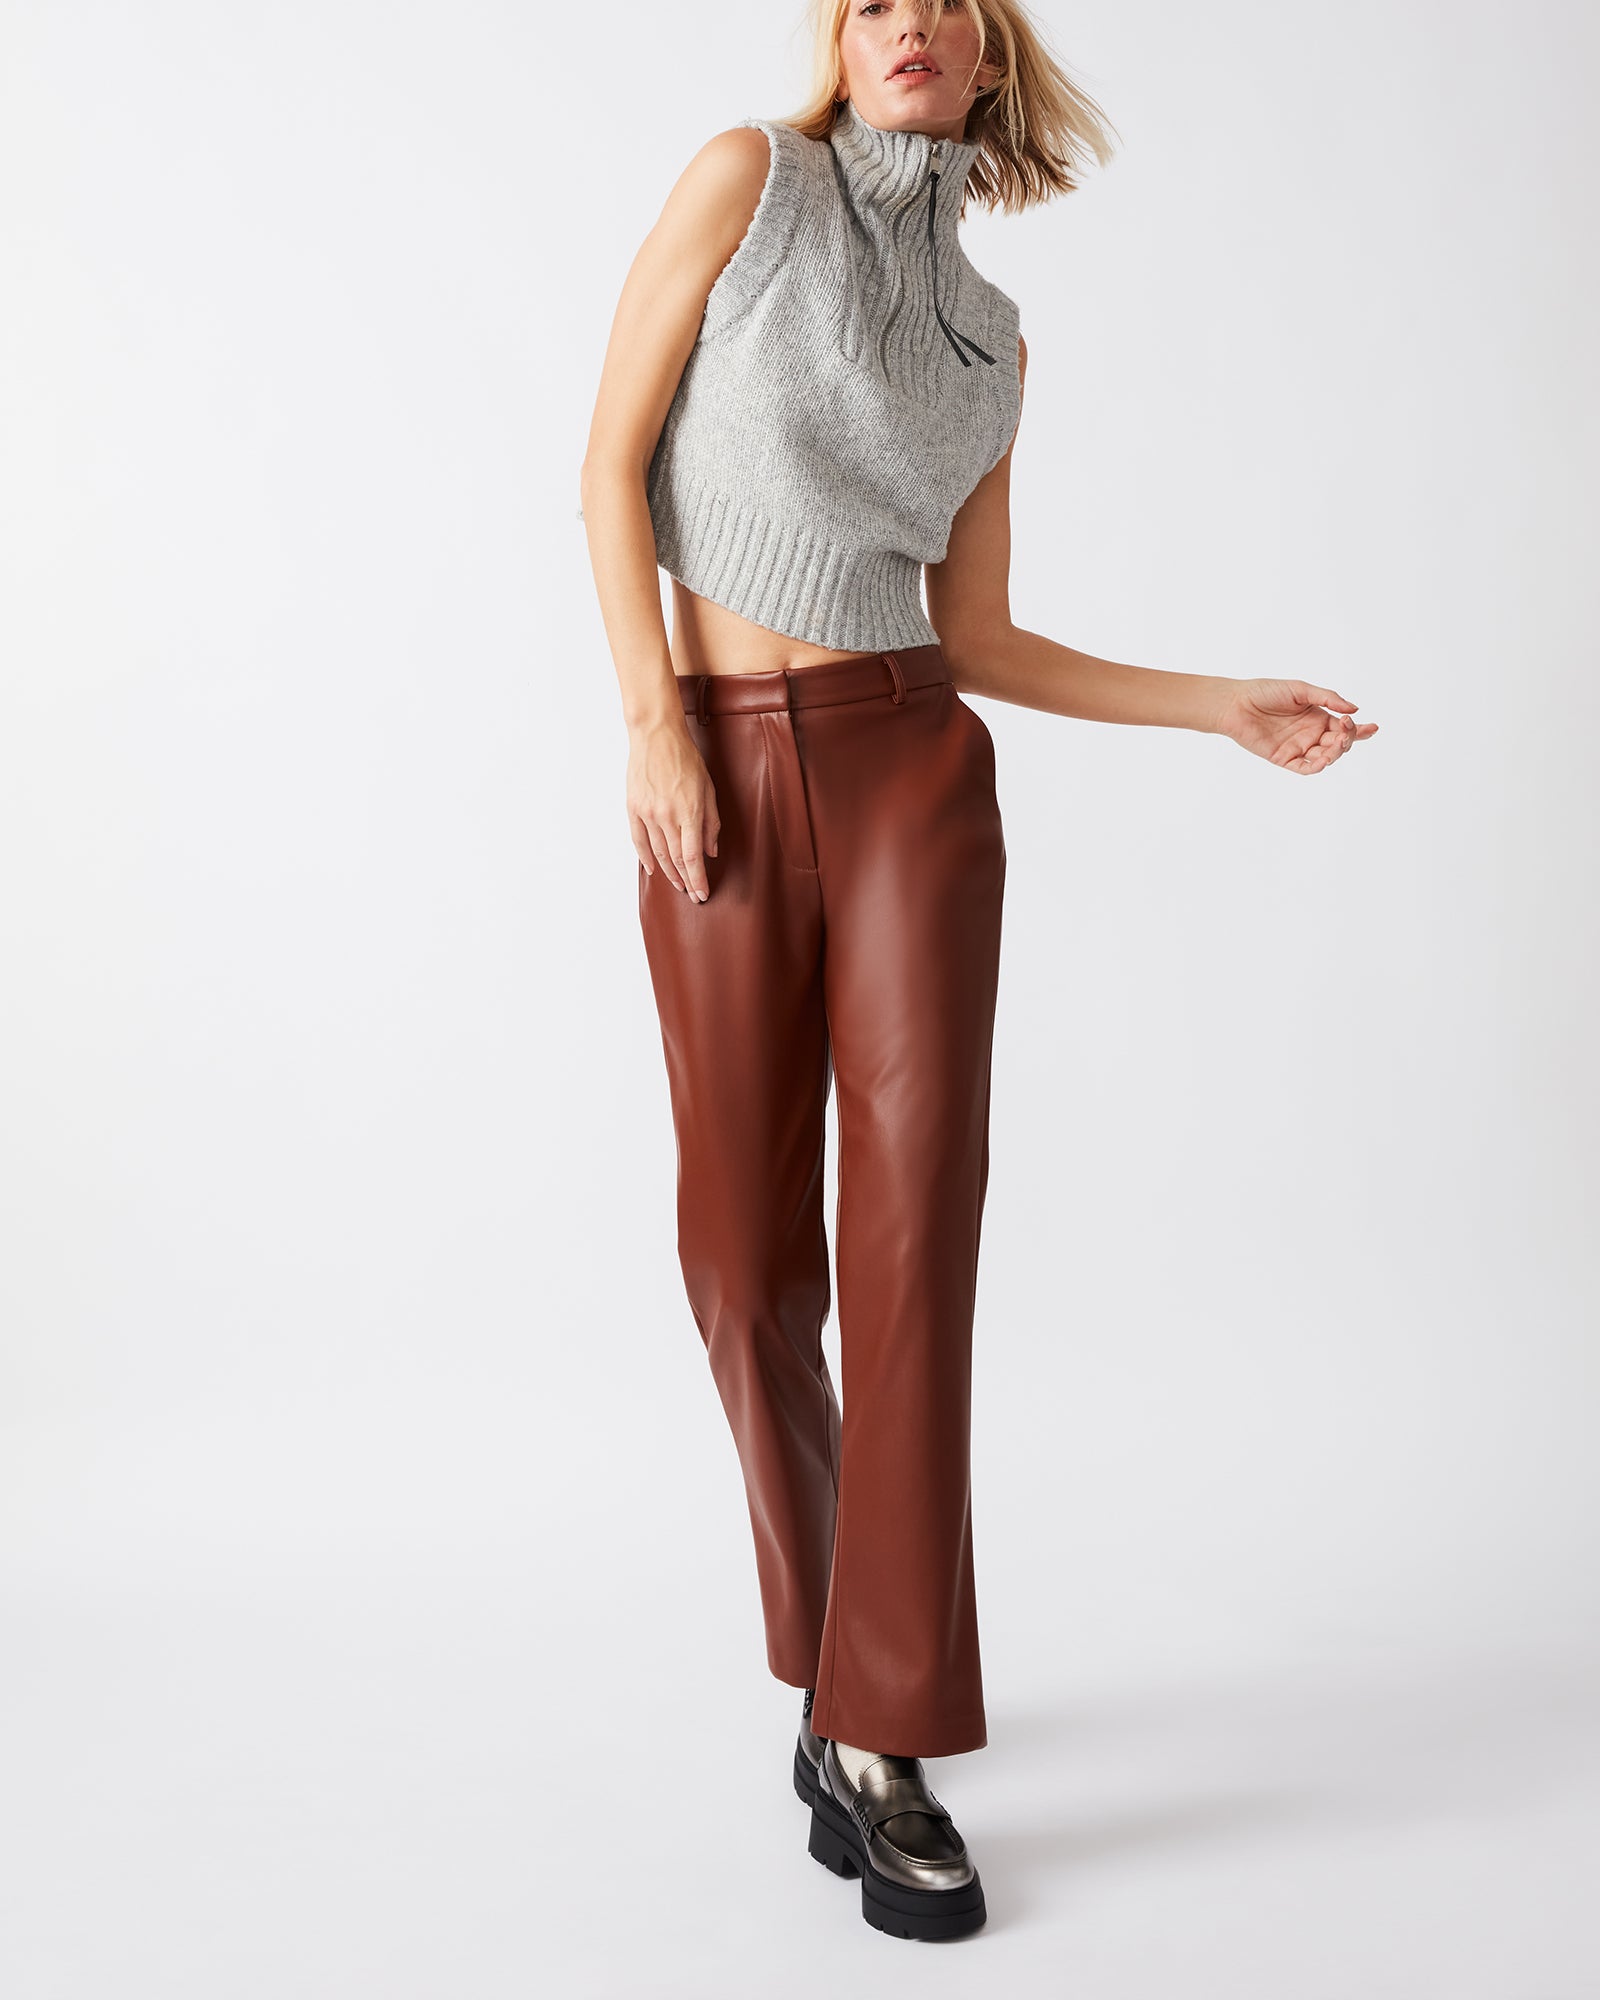 Zara Leather Trousers & Pants for Women